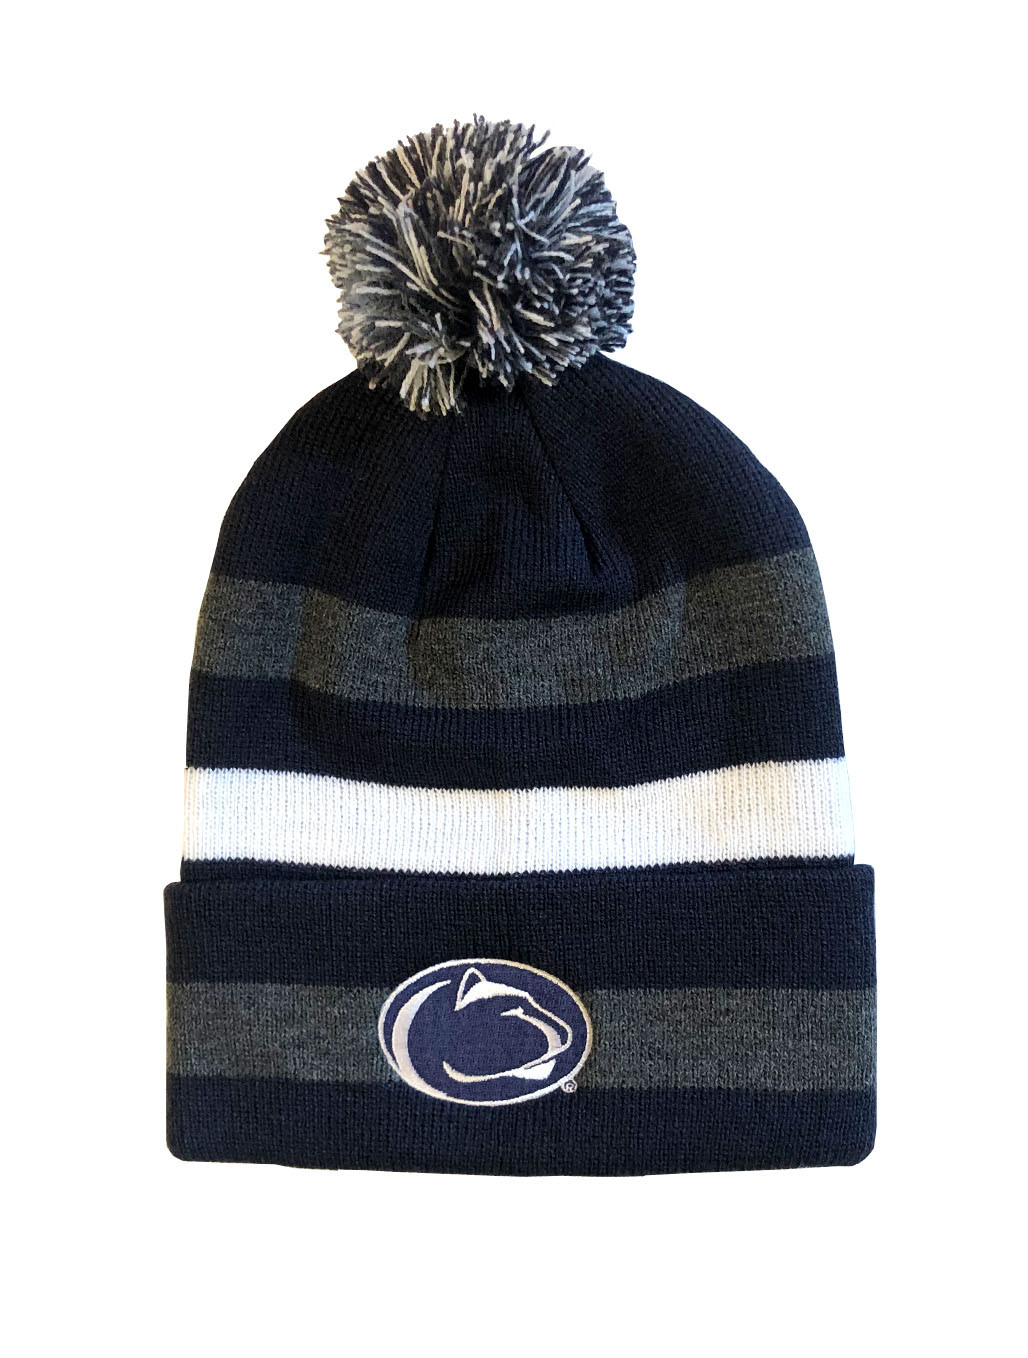 Penn State Striped Pom Hat Winter